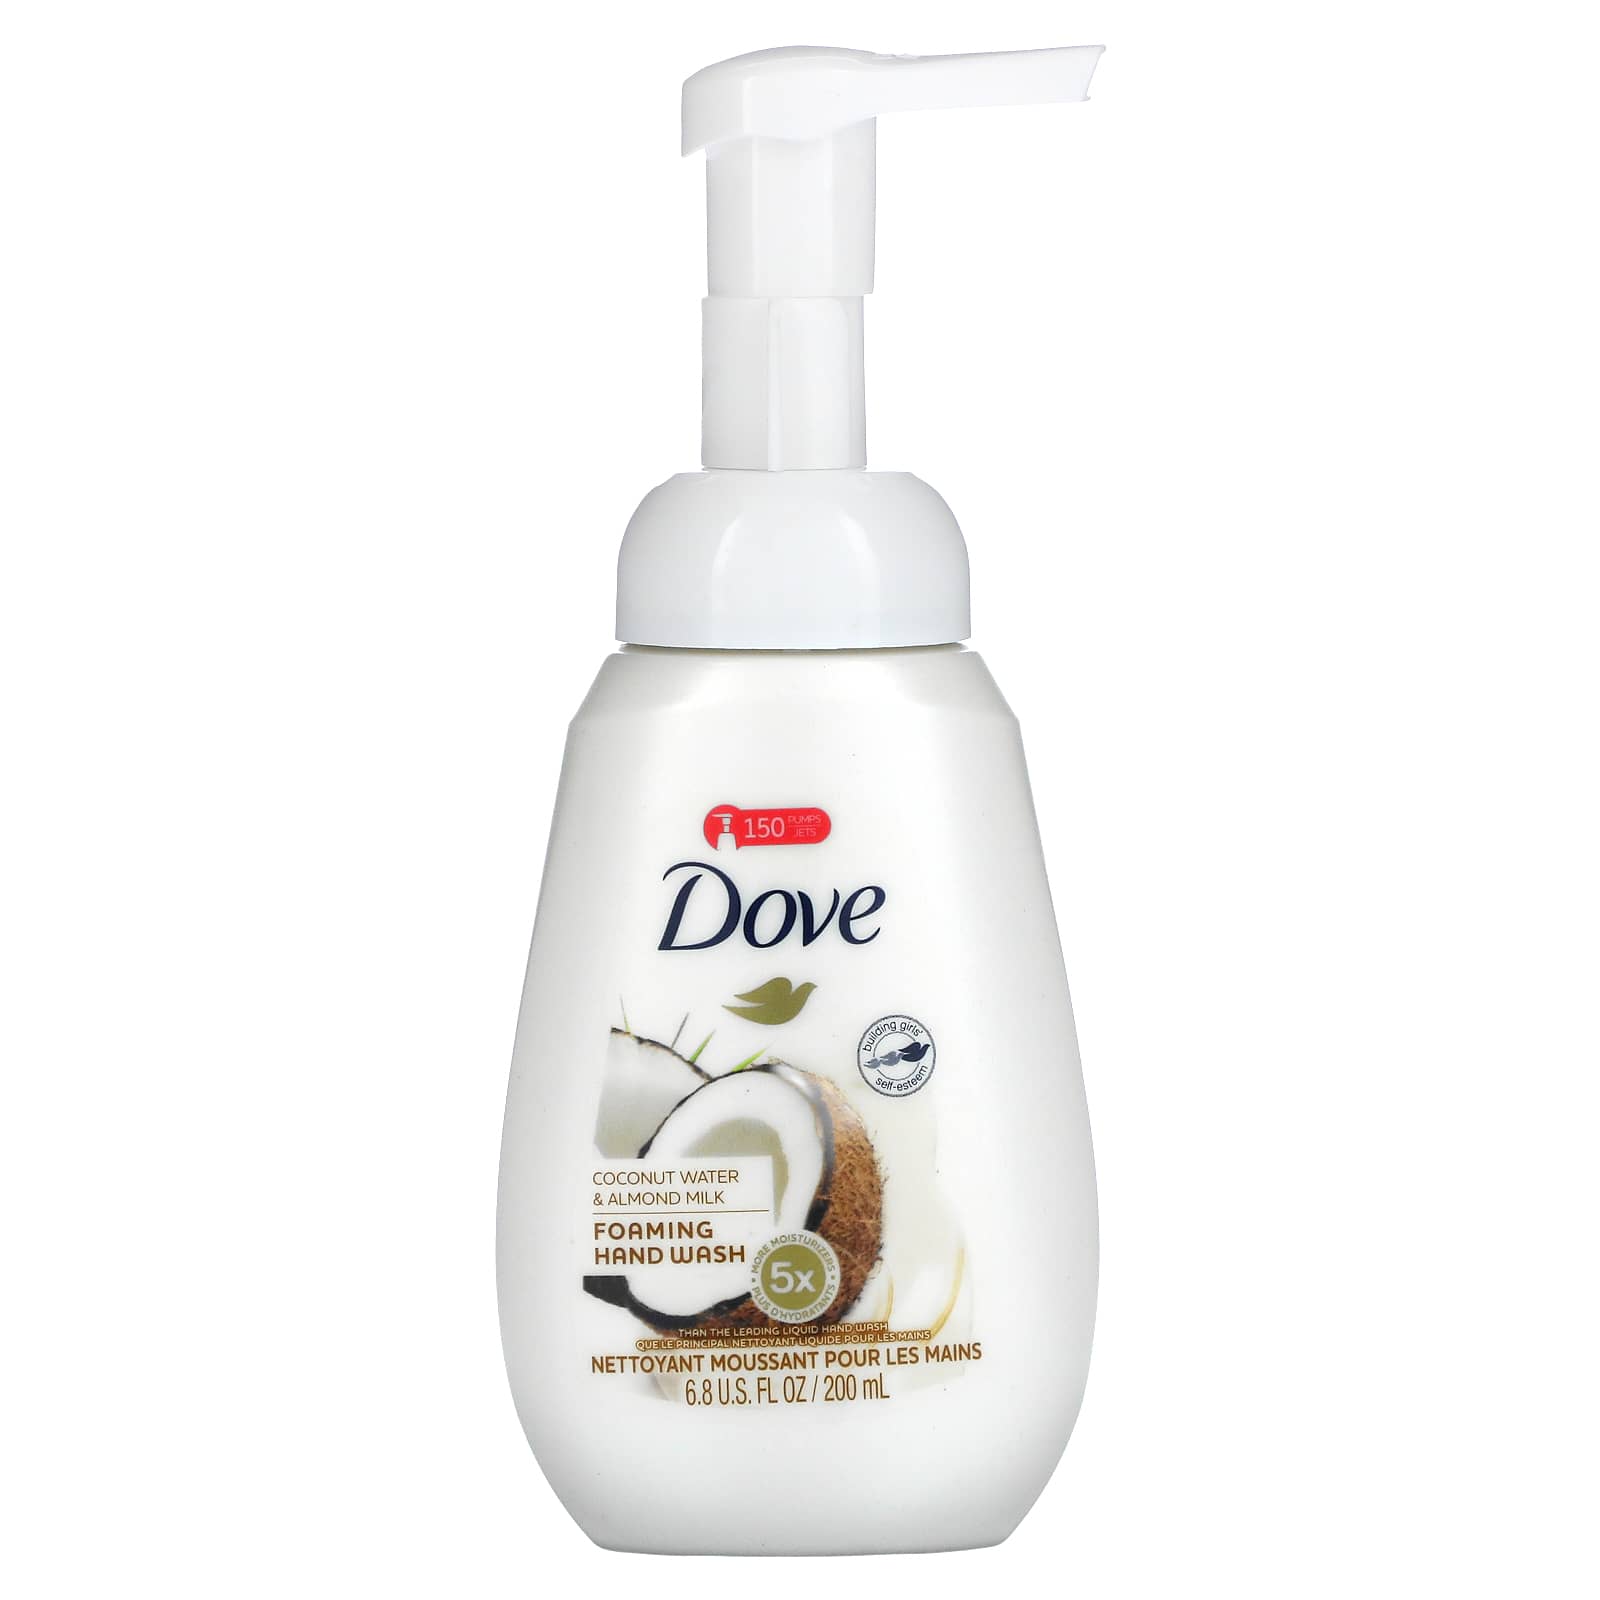 Dove, Foaming Hand Wash, Coconut Water & Almond Milk (200 ml)